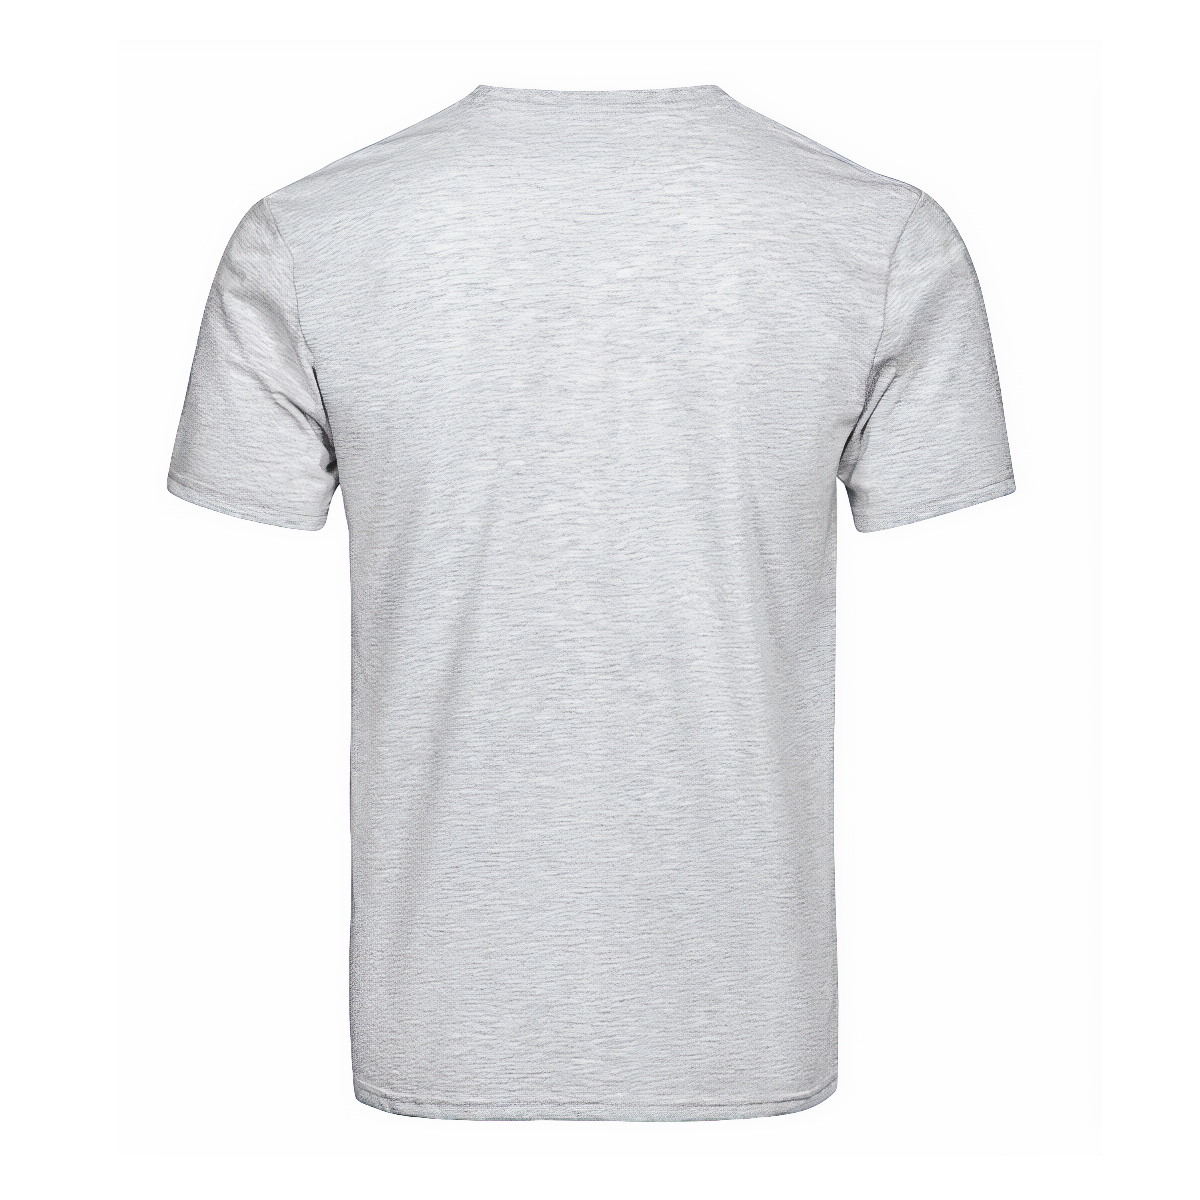 Lennox (Lennox Kincaid) Tartan Crest T-shirt - I'm not yelling style